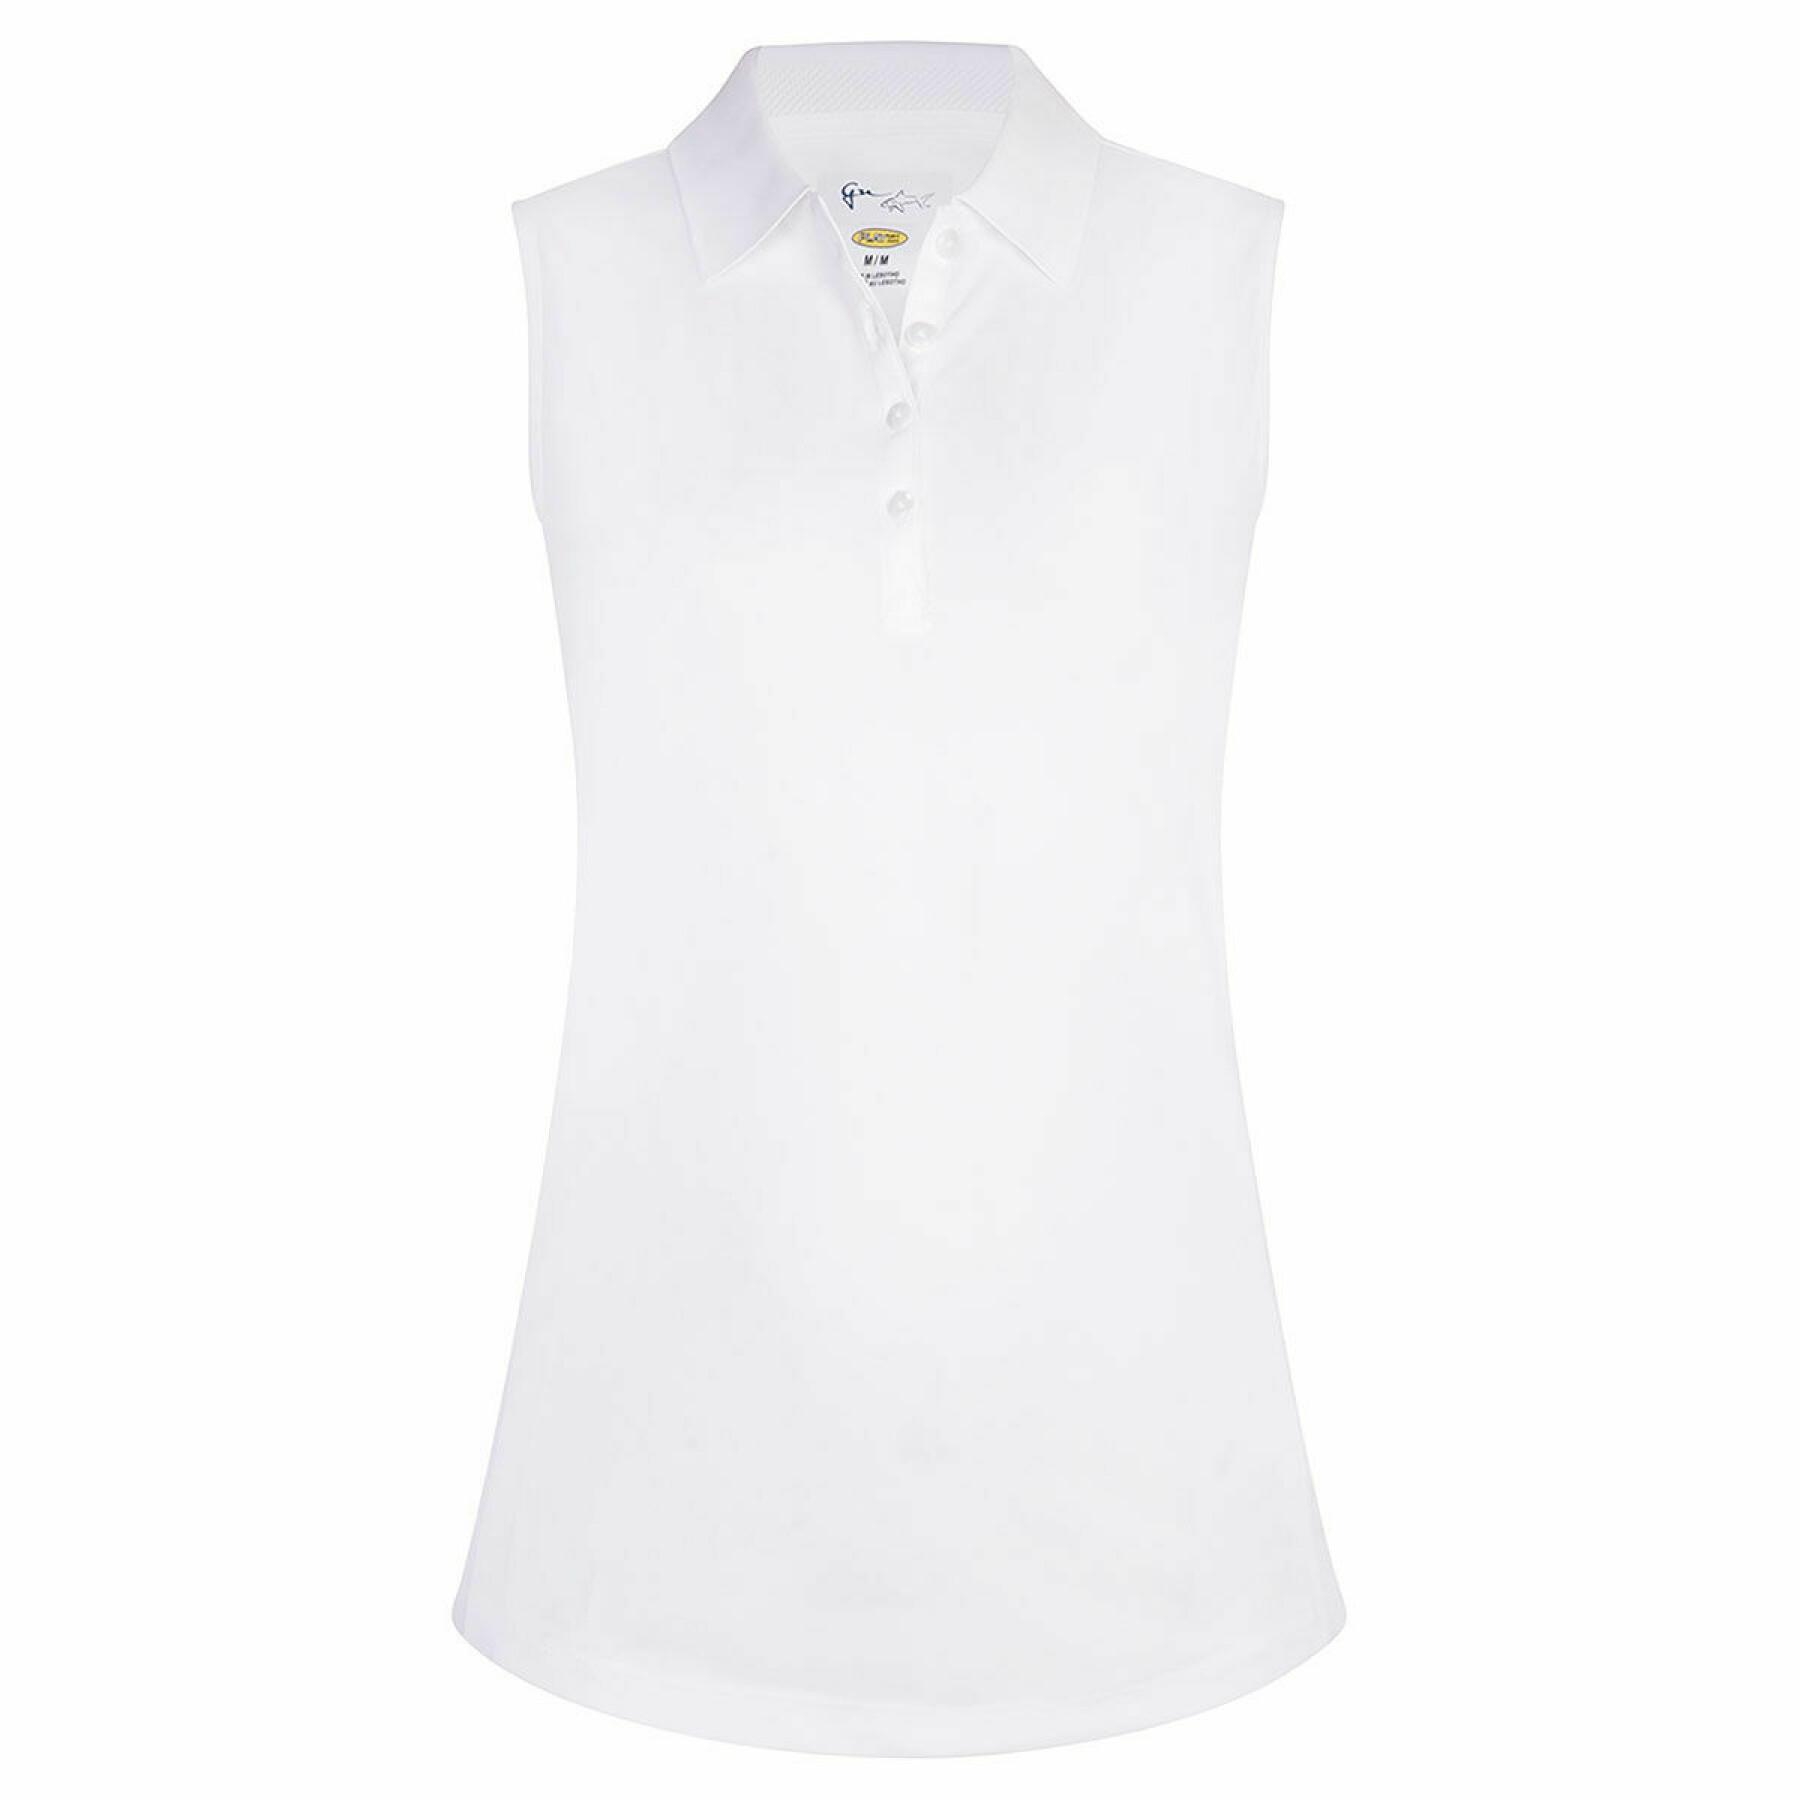 Sleeveless women's polo shirt Greg Norman